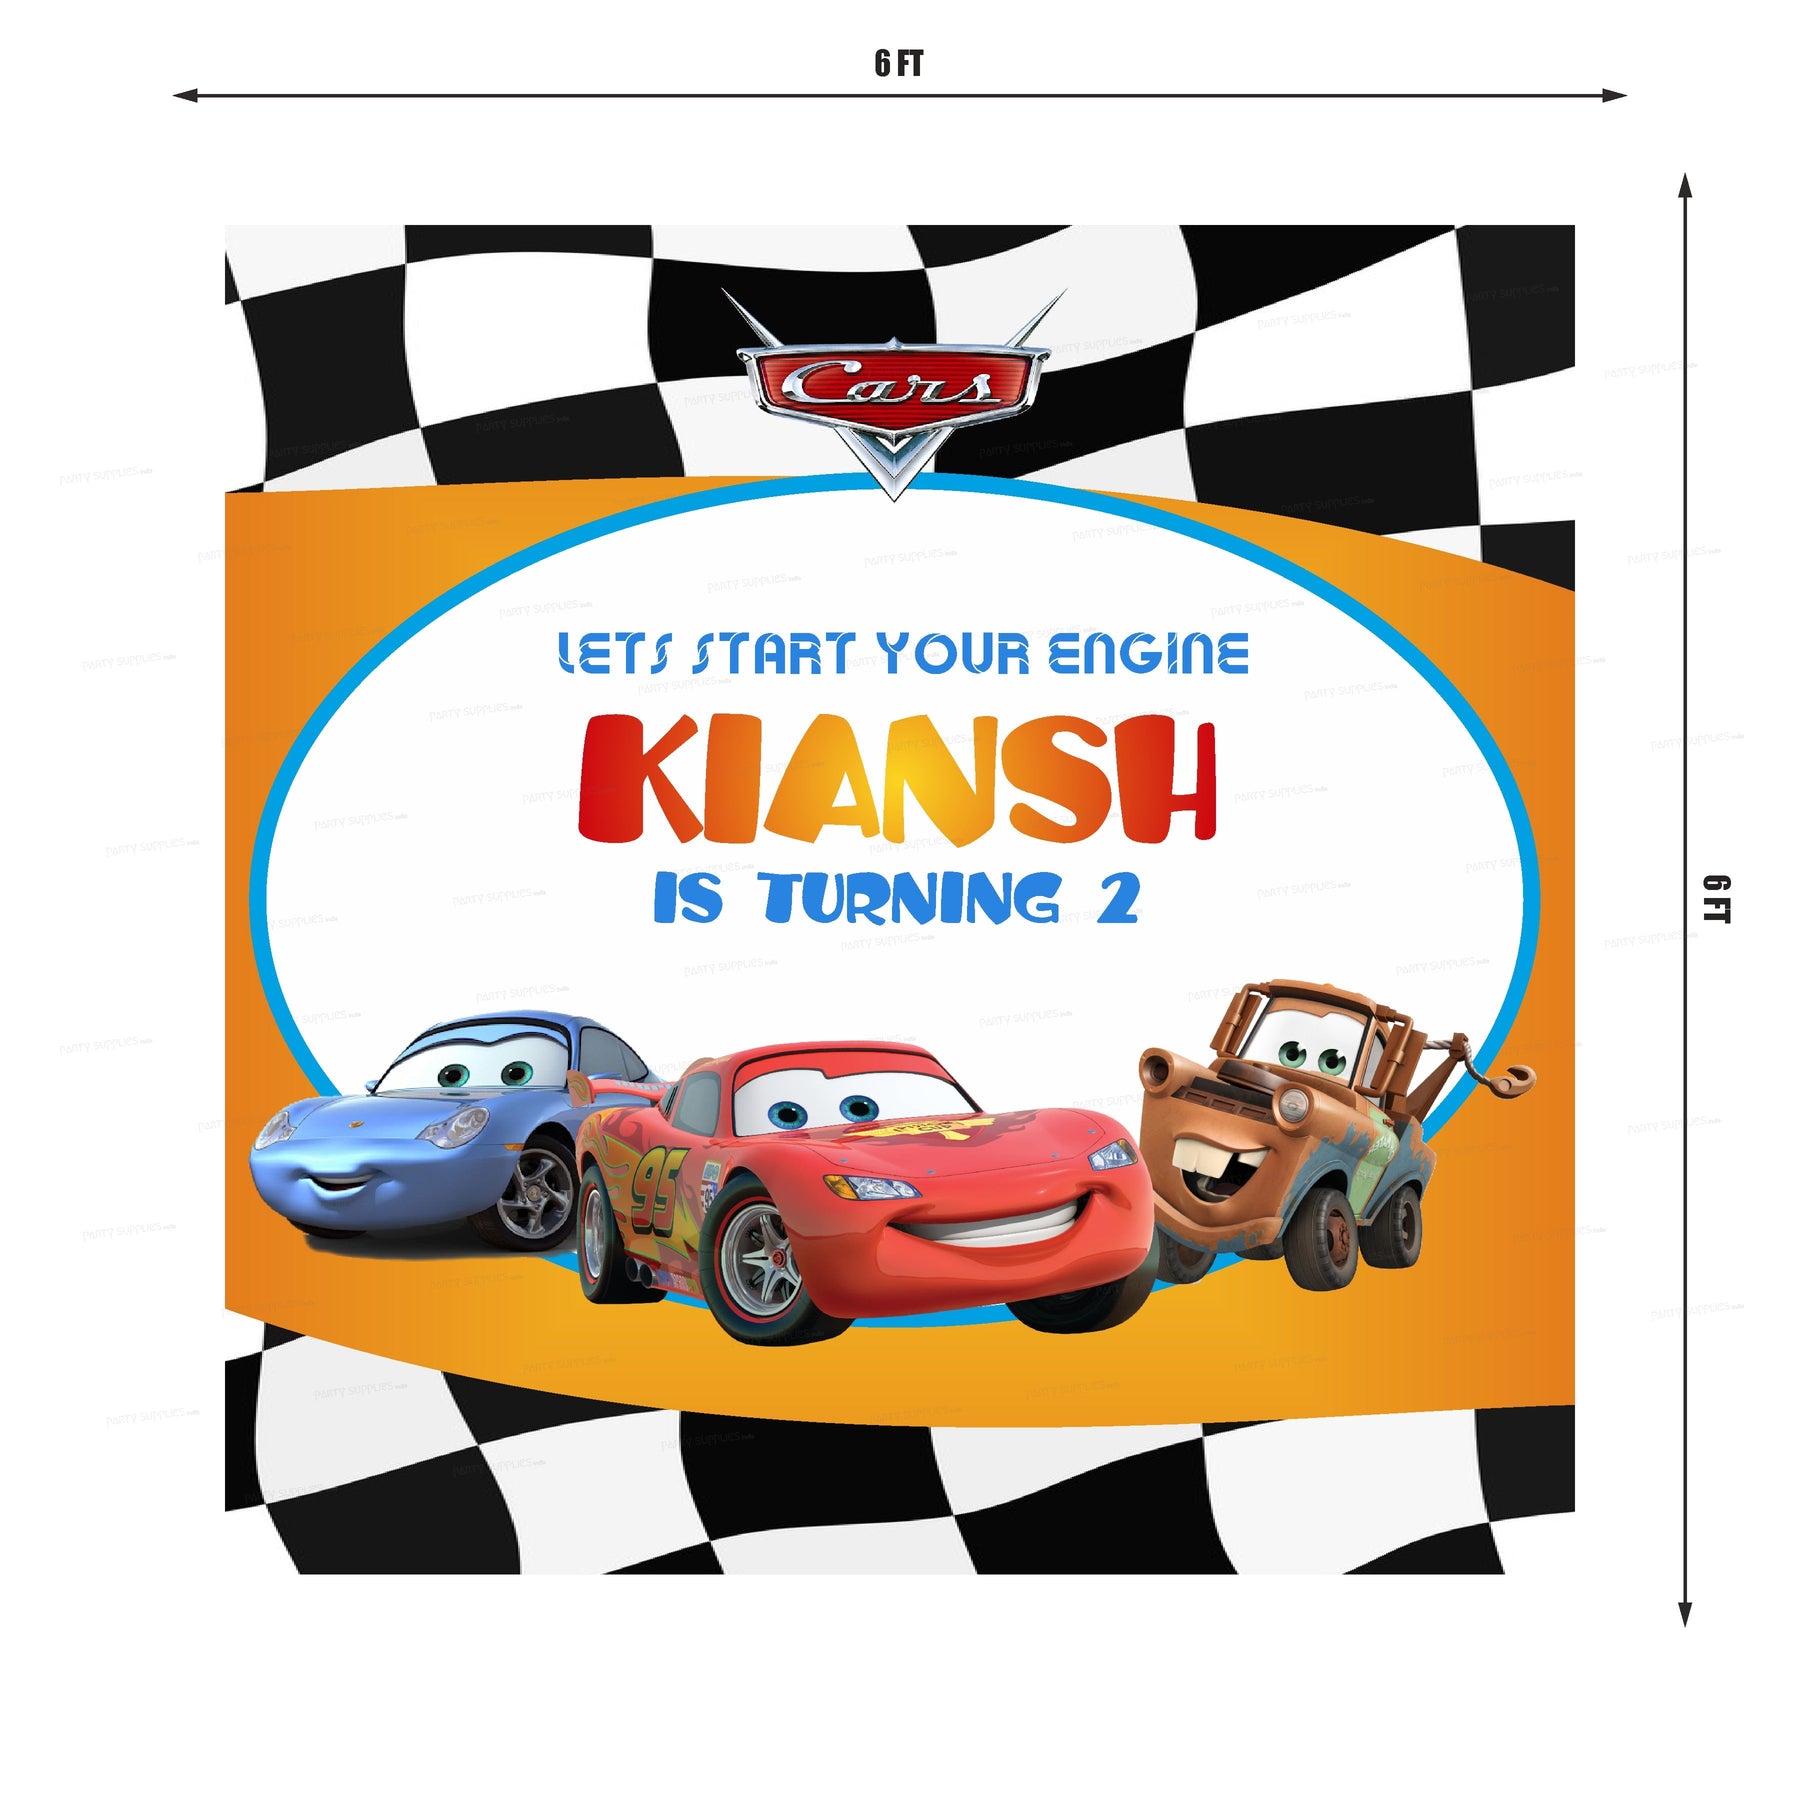 PSI Car Theme Personalized Square Backdrop